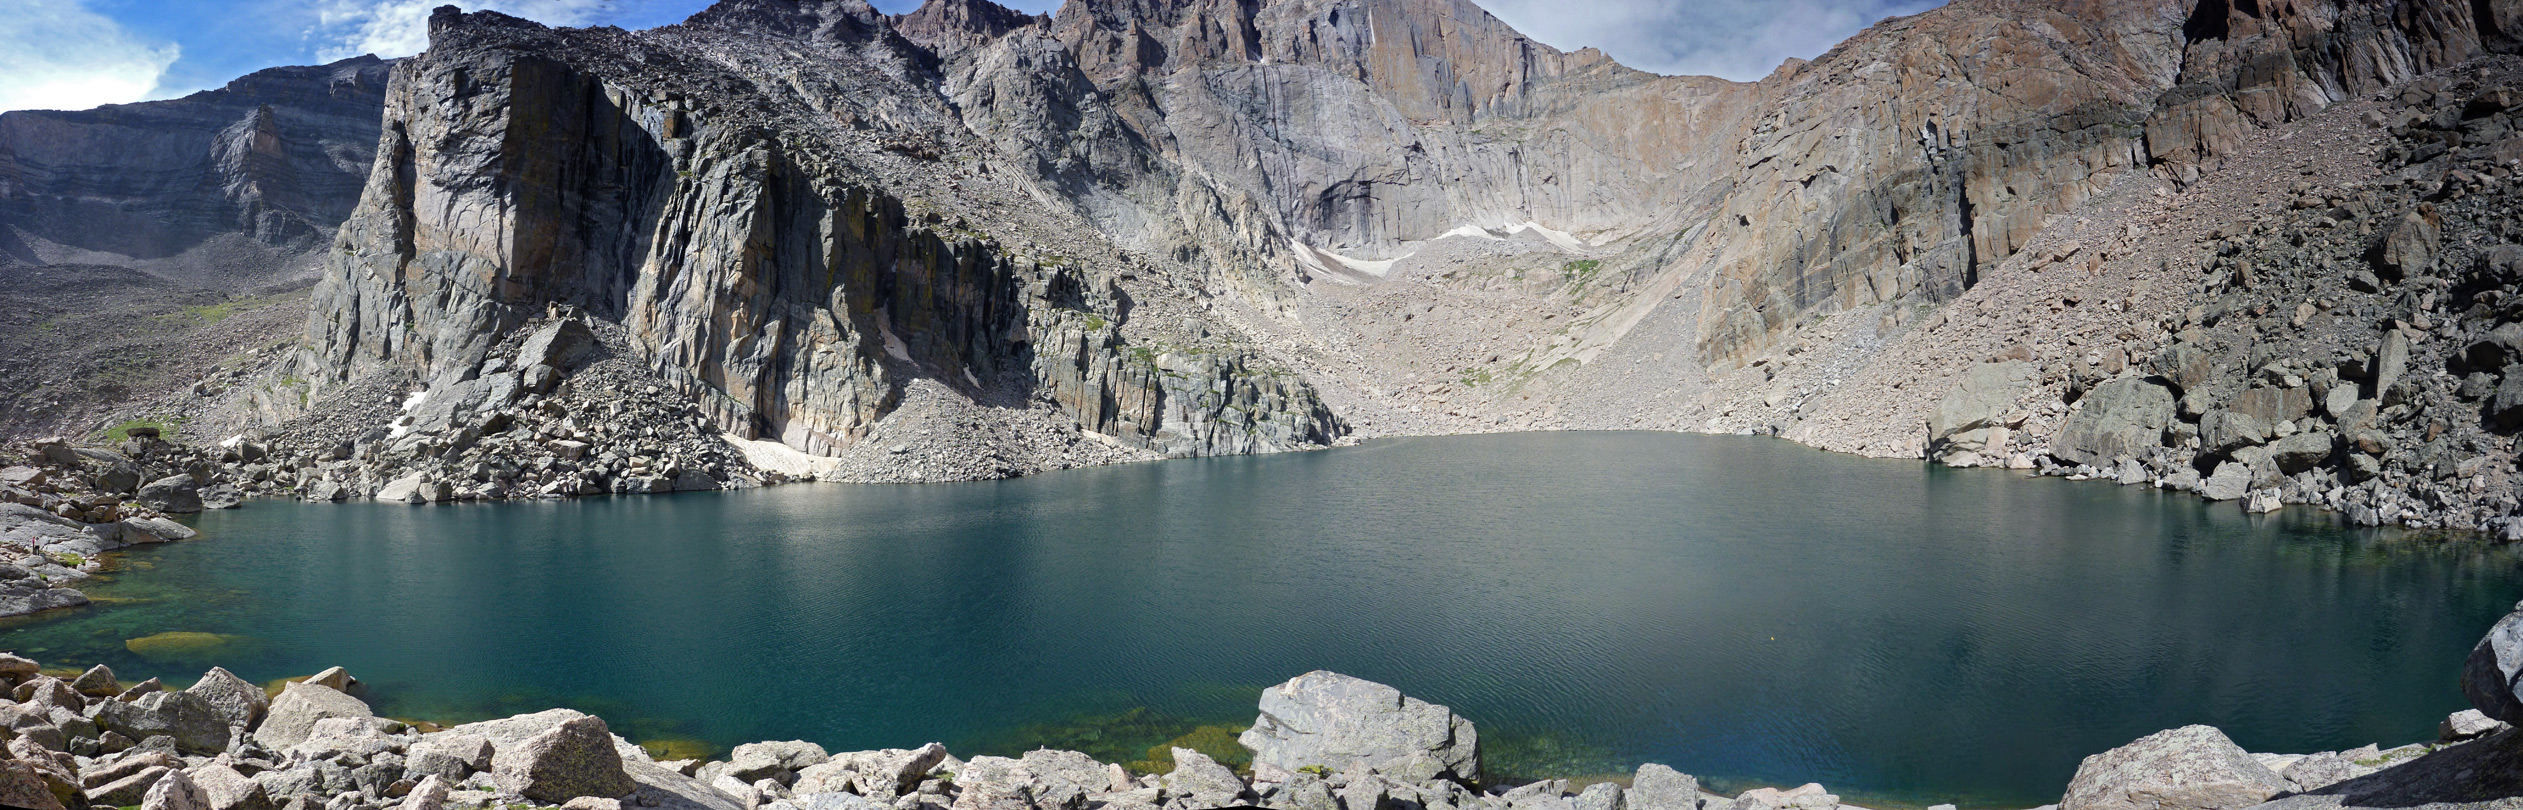 Panorama of Chasm Lake